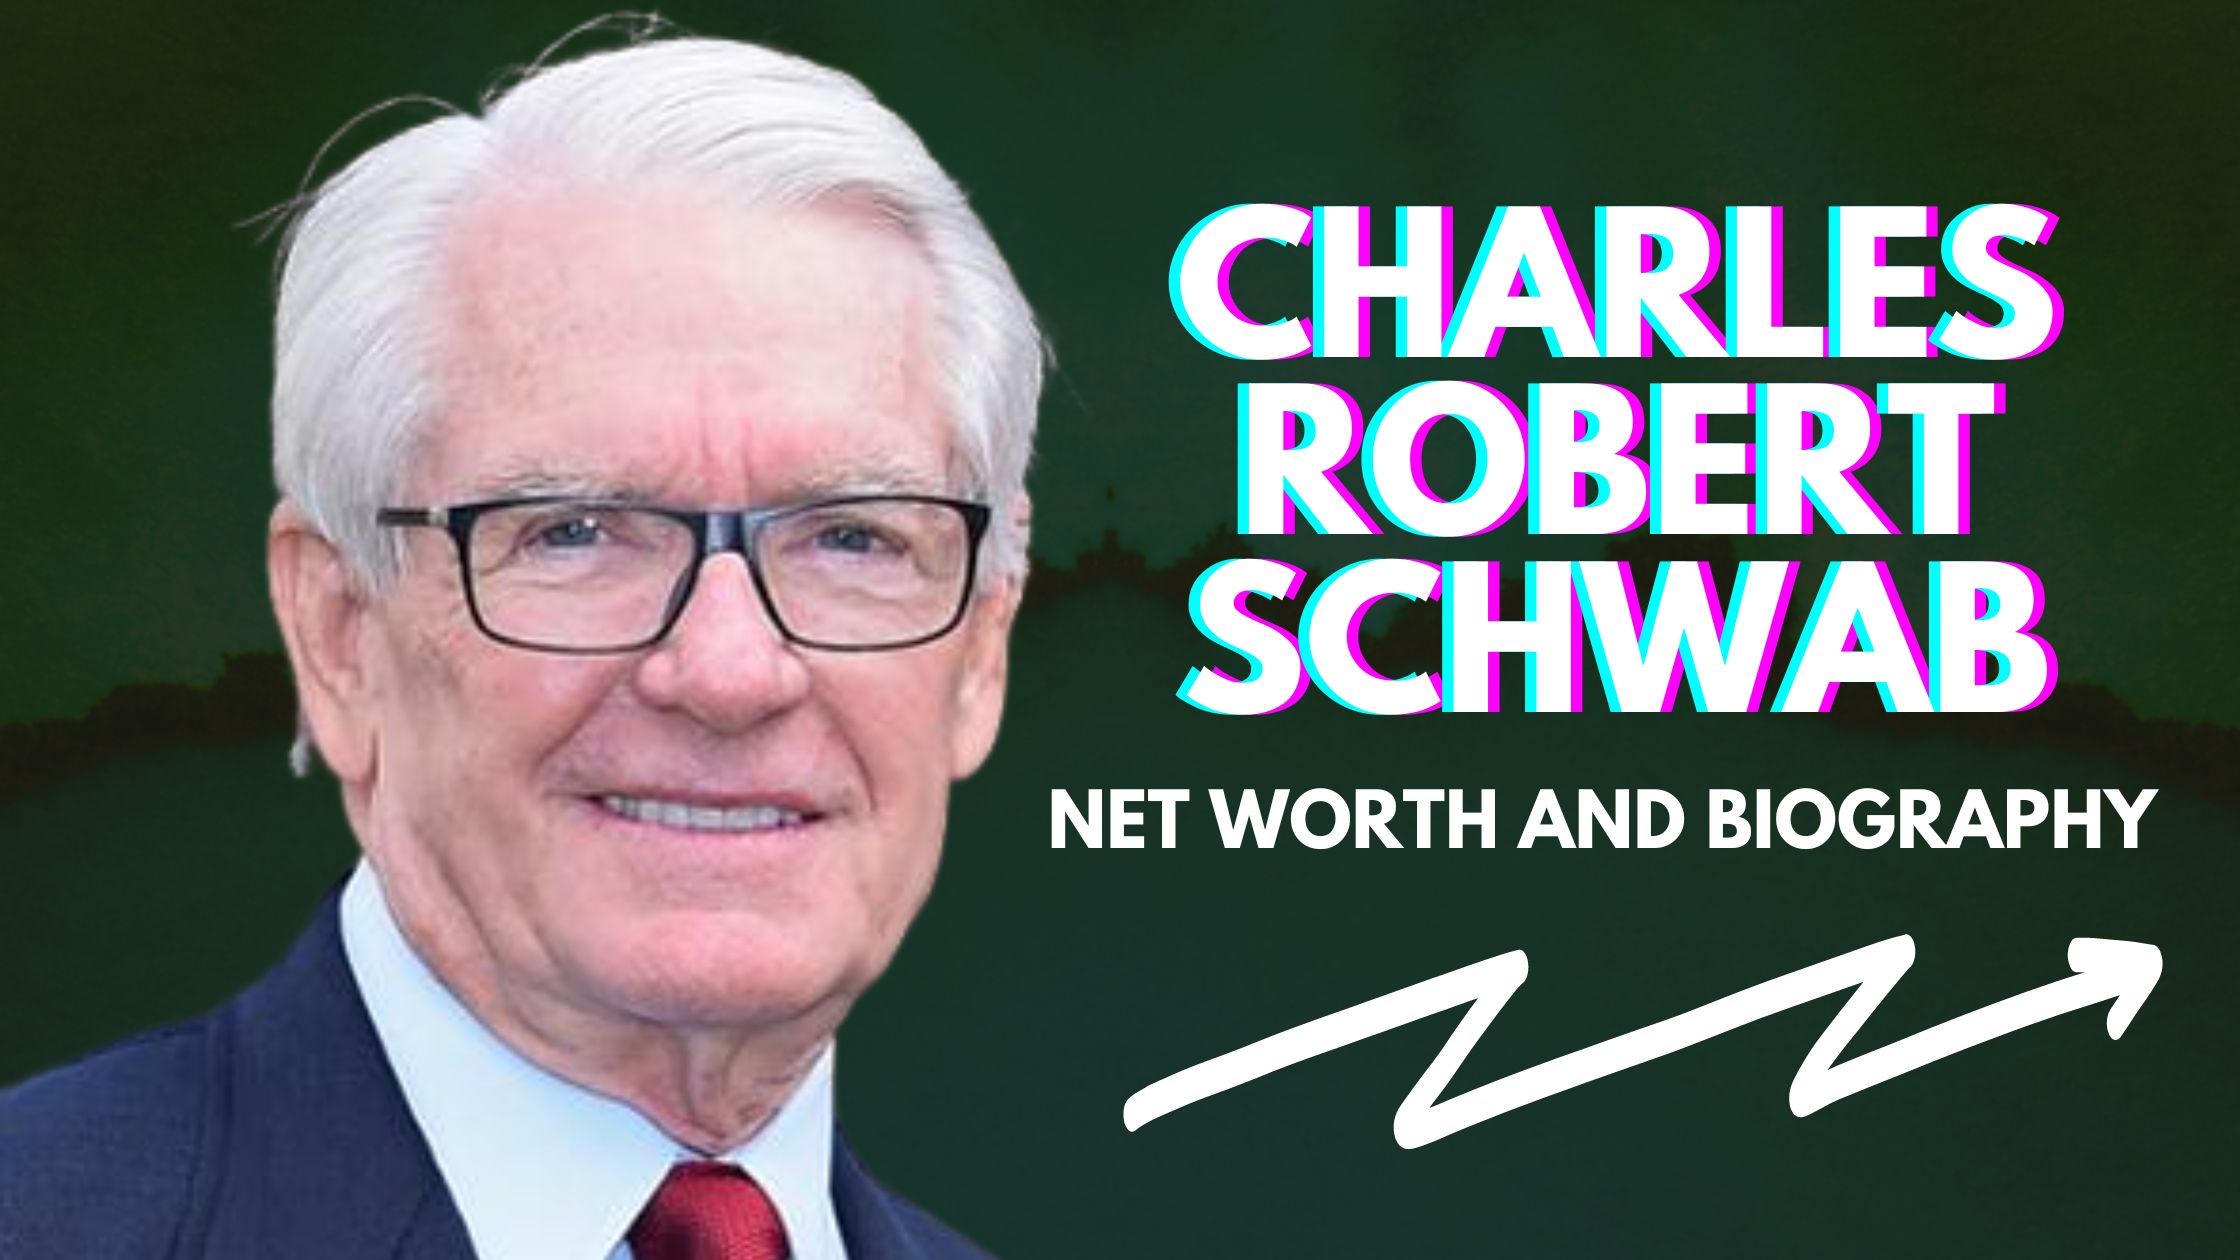 Charles Robert Schwab Net Worth And Biography